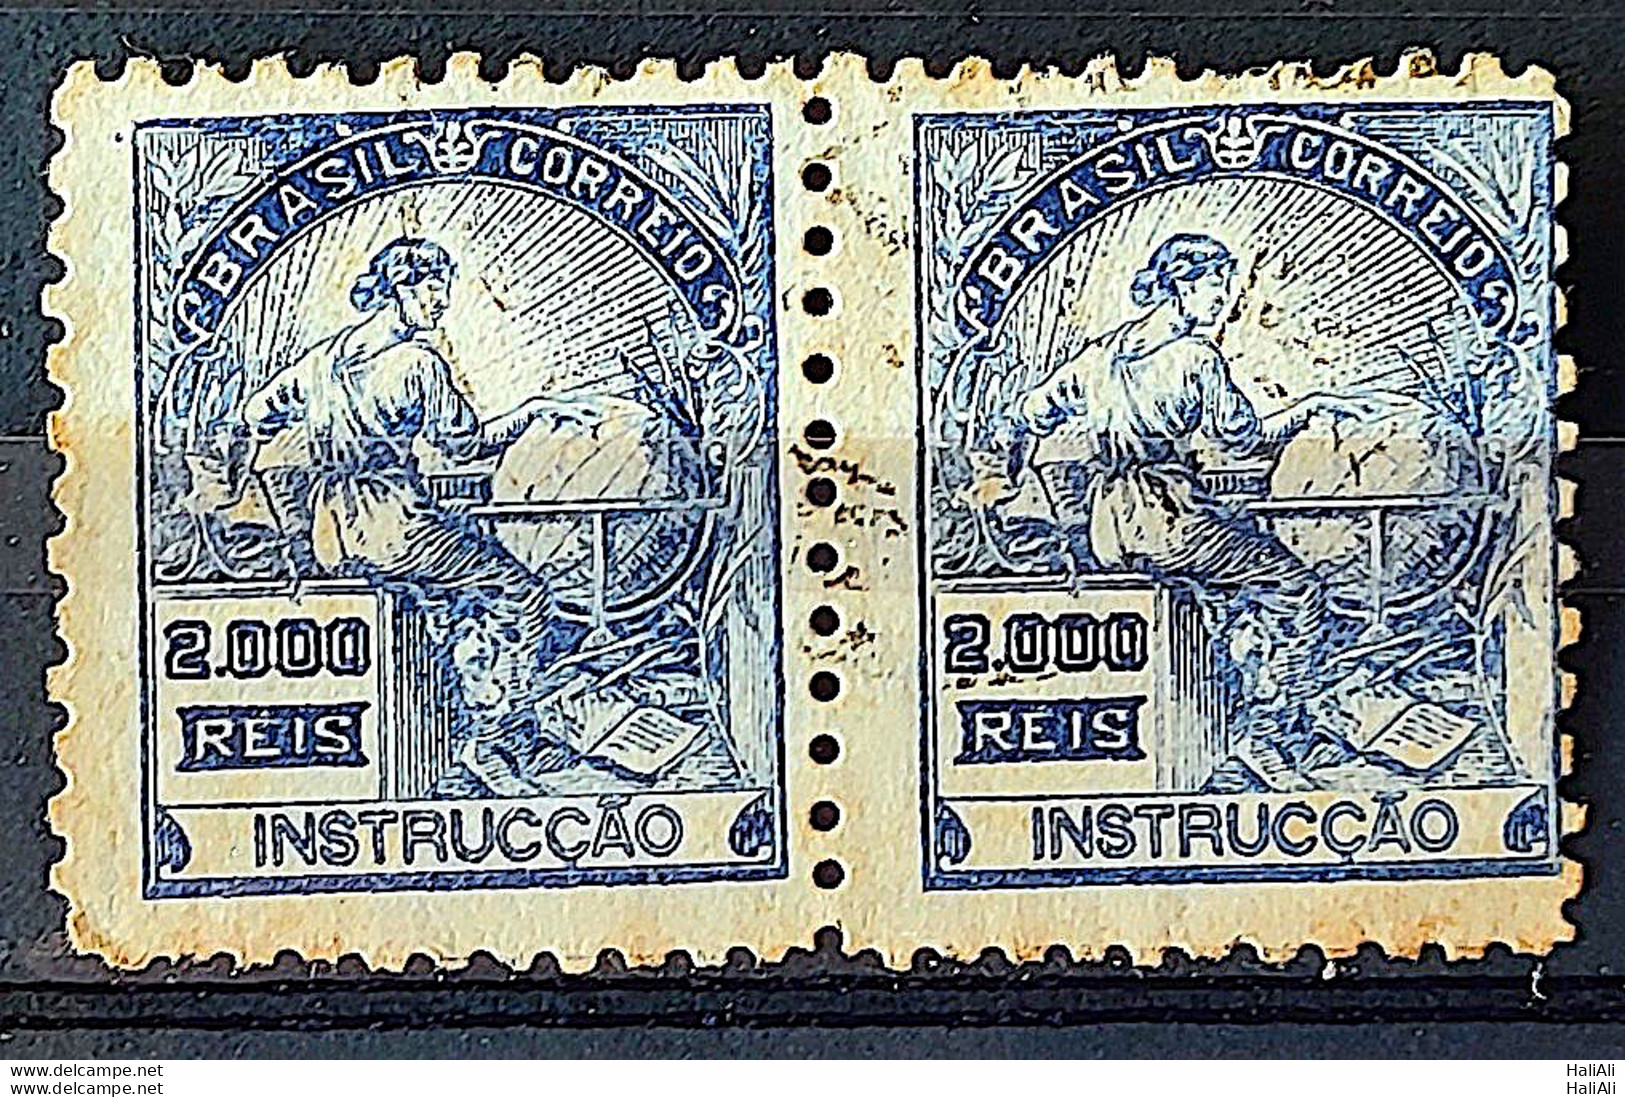 Brazil Regular Stamp Cod Rhm 308 Grandma Instruction 2000 Reis Filigree N 1936 Pair Circulated 2 - Used Stamps